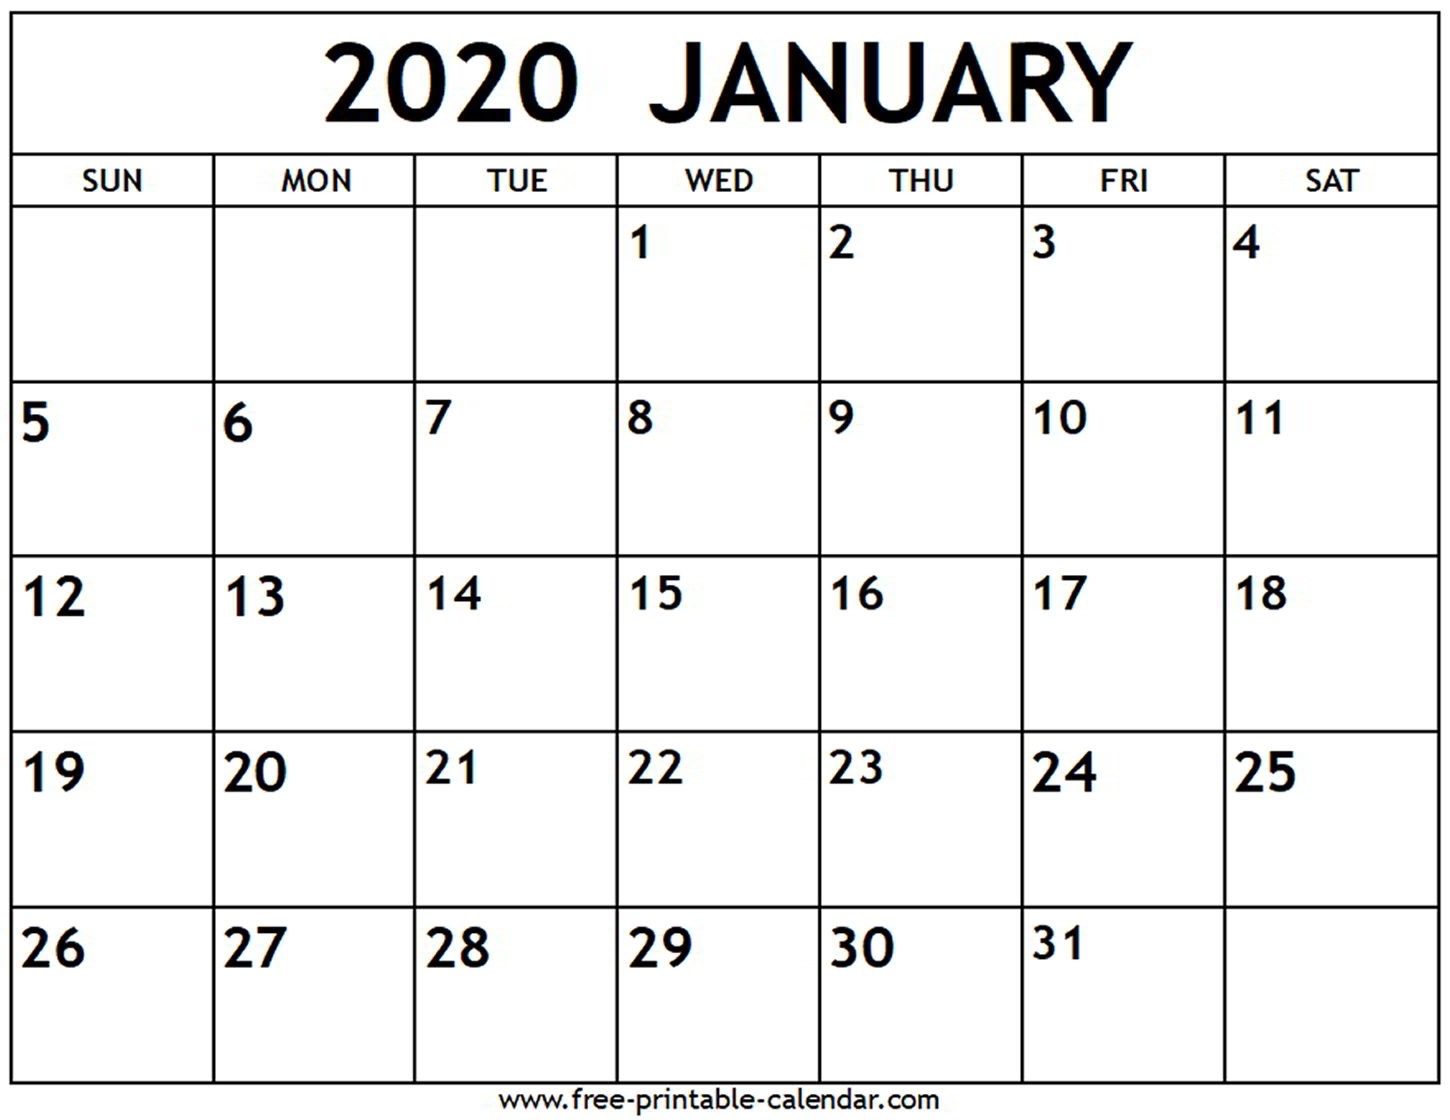 January 2020 Calendar - Free-Printable-Calendar-January 2020 Calendar To Print